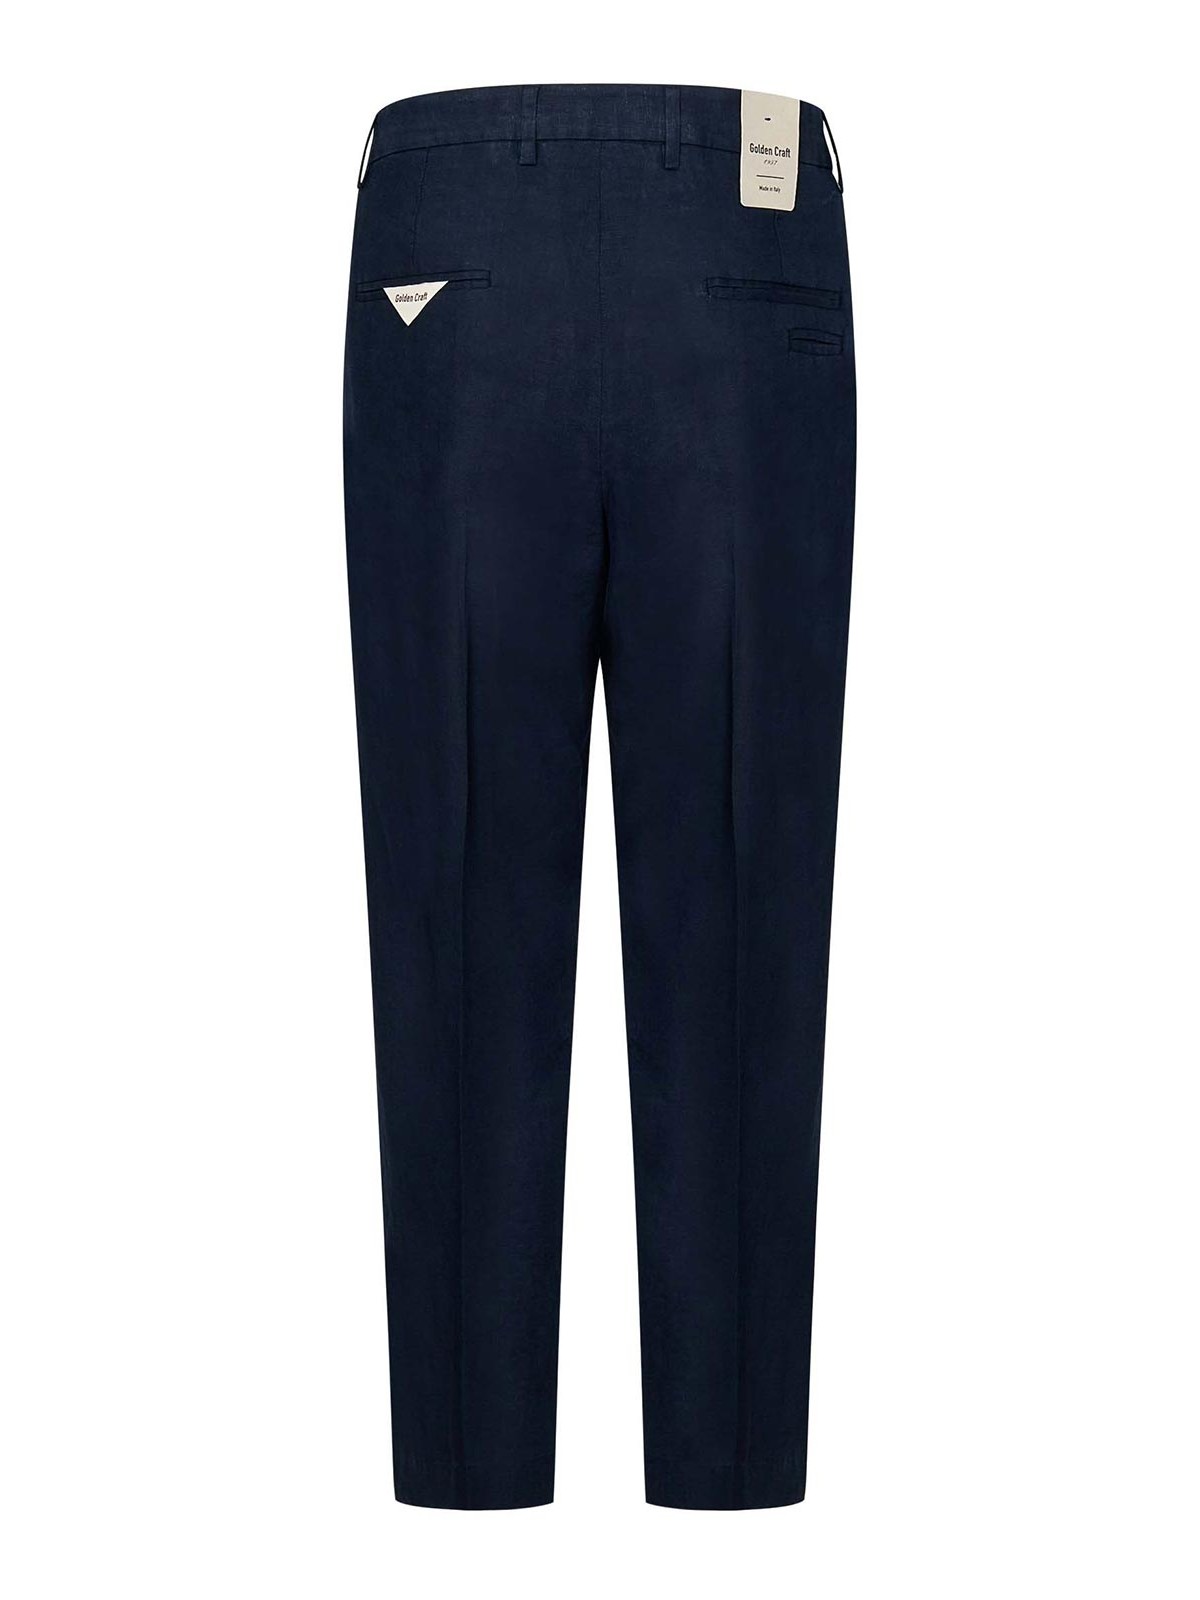 Shop Golden Craft Navy Blue Linen Chino Trousers